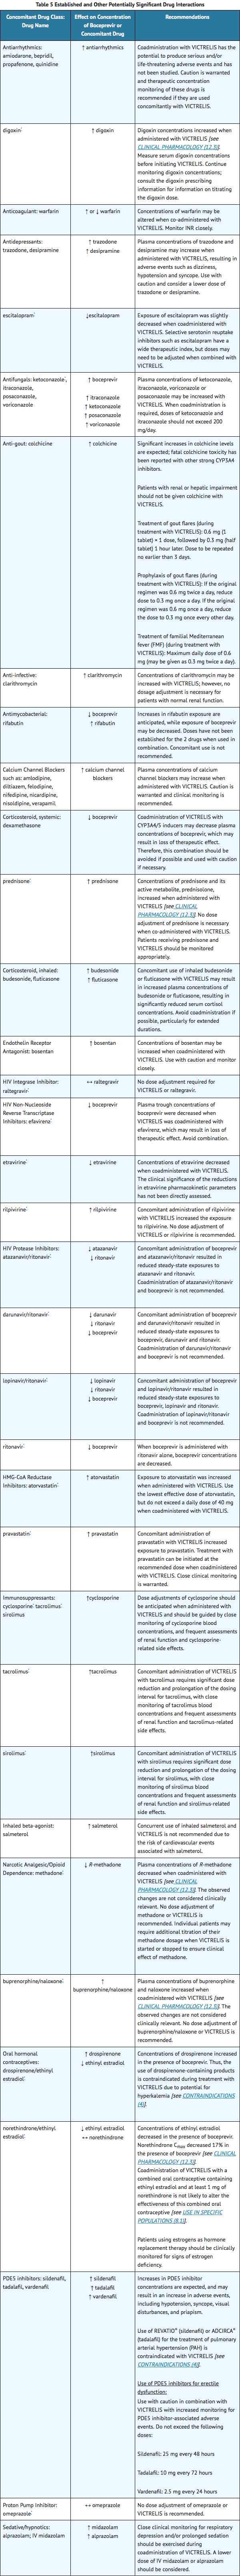 File:Boceprevir Drug Interactions.png